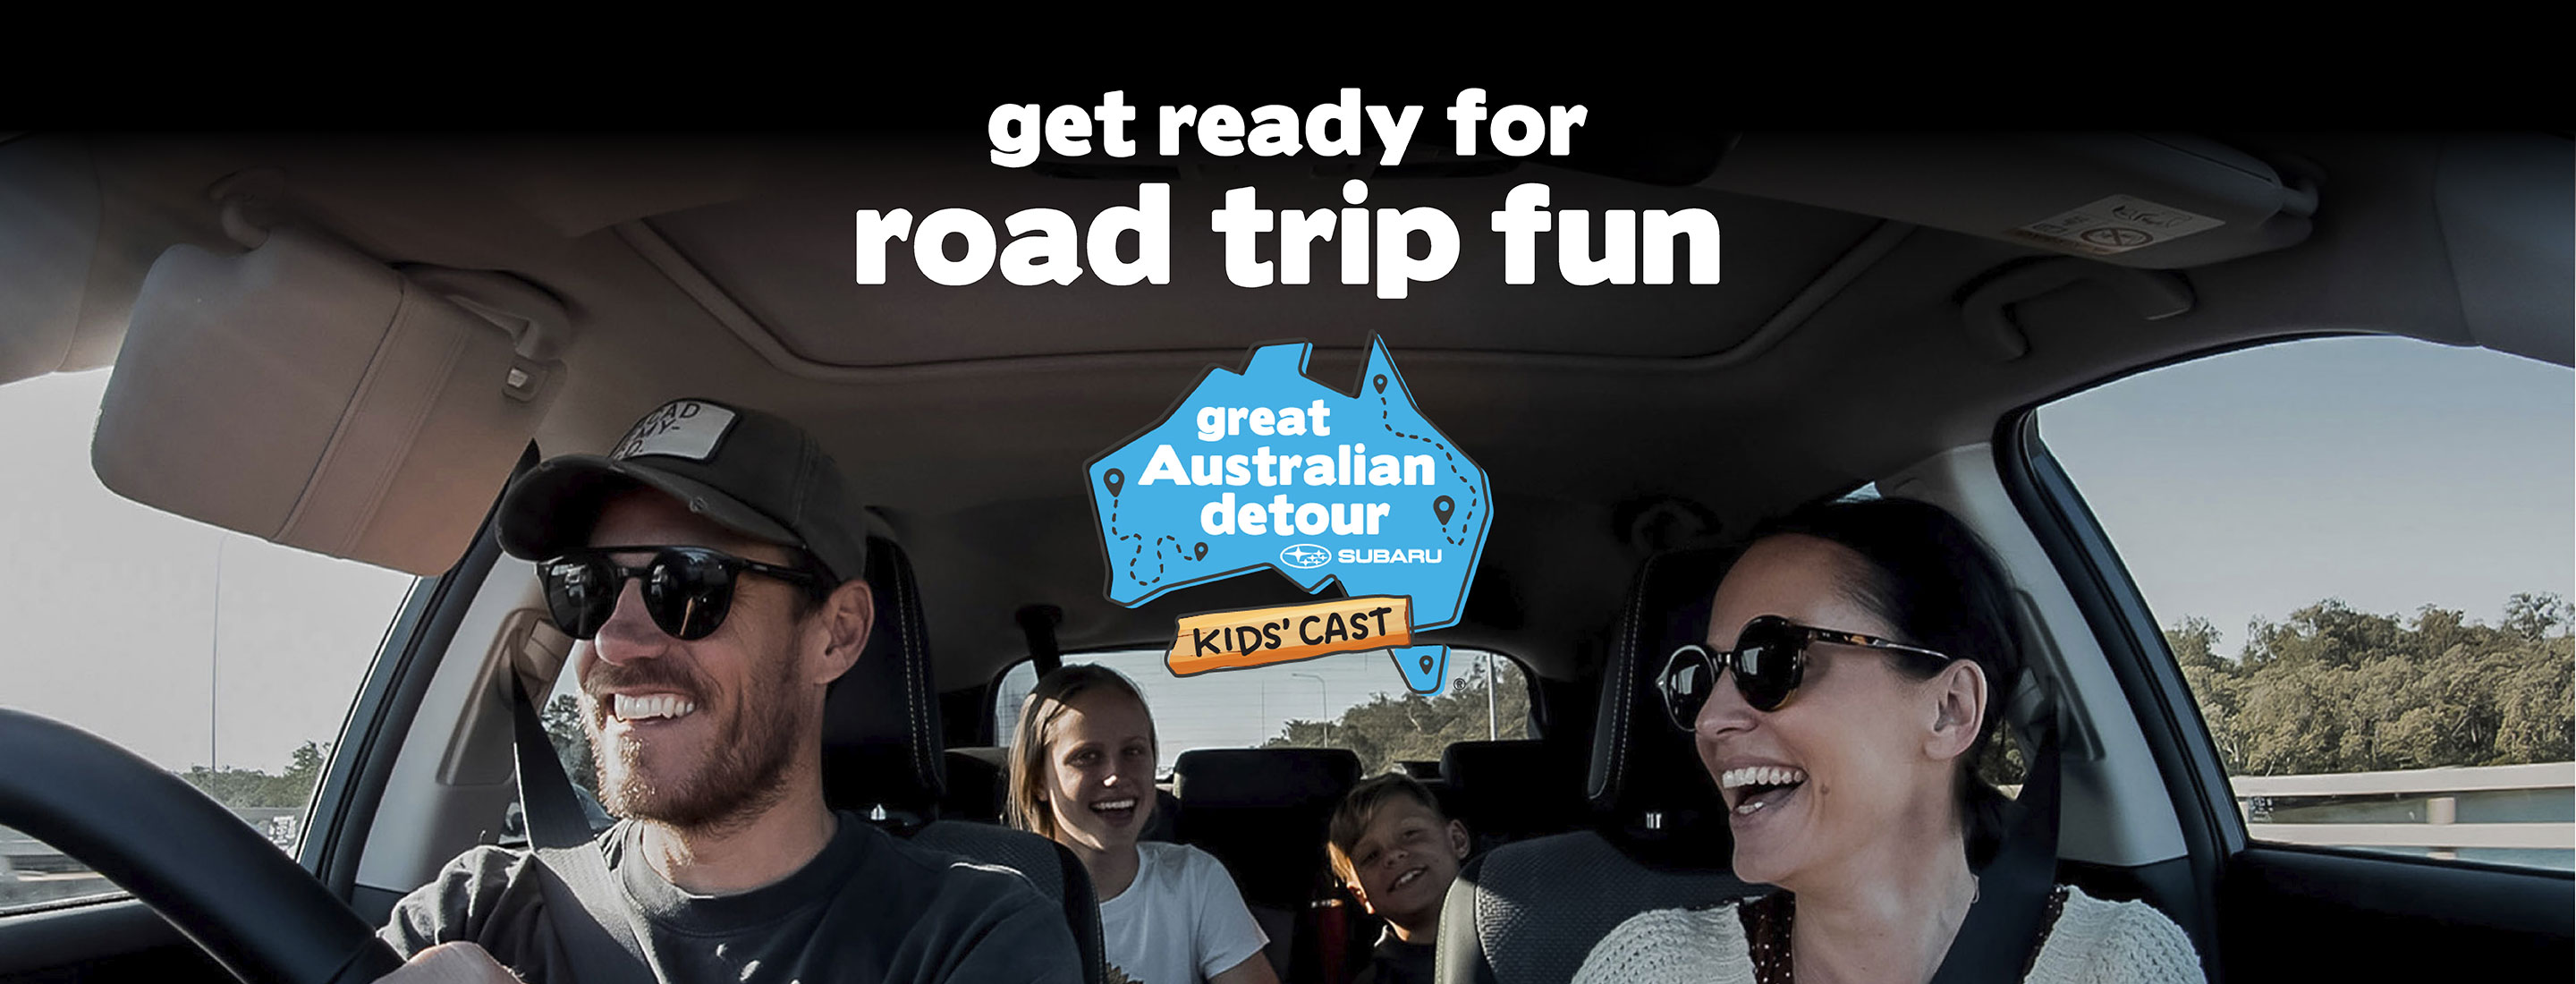 Subaru Australia launches the Great Australian Detour Kids' Cast